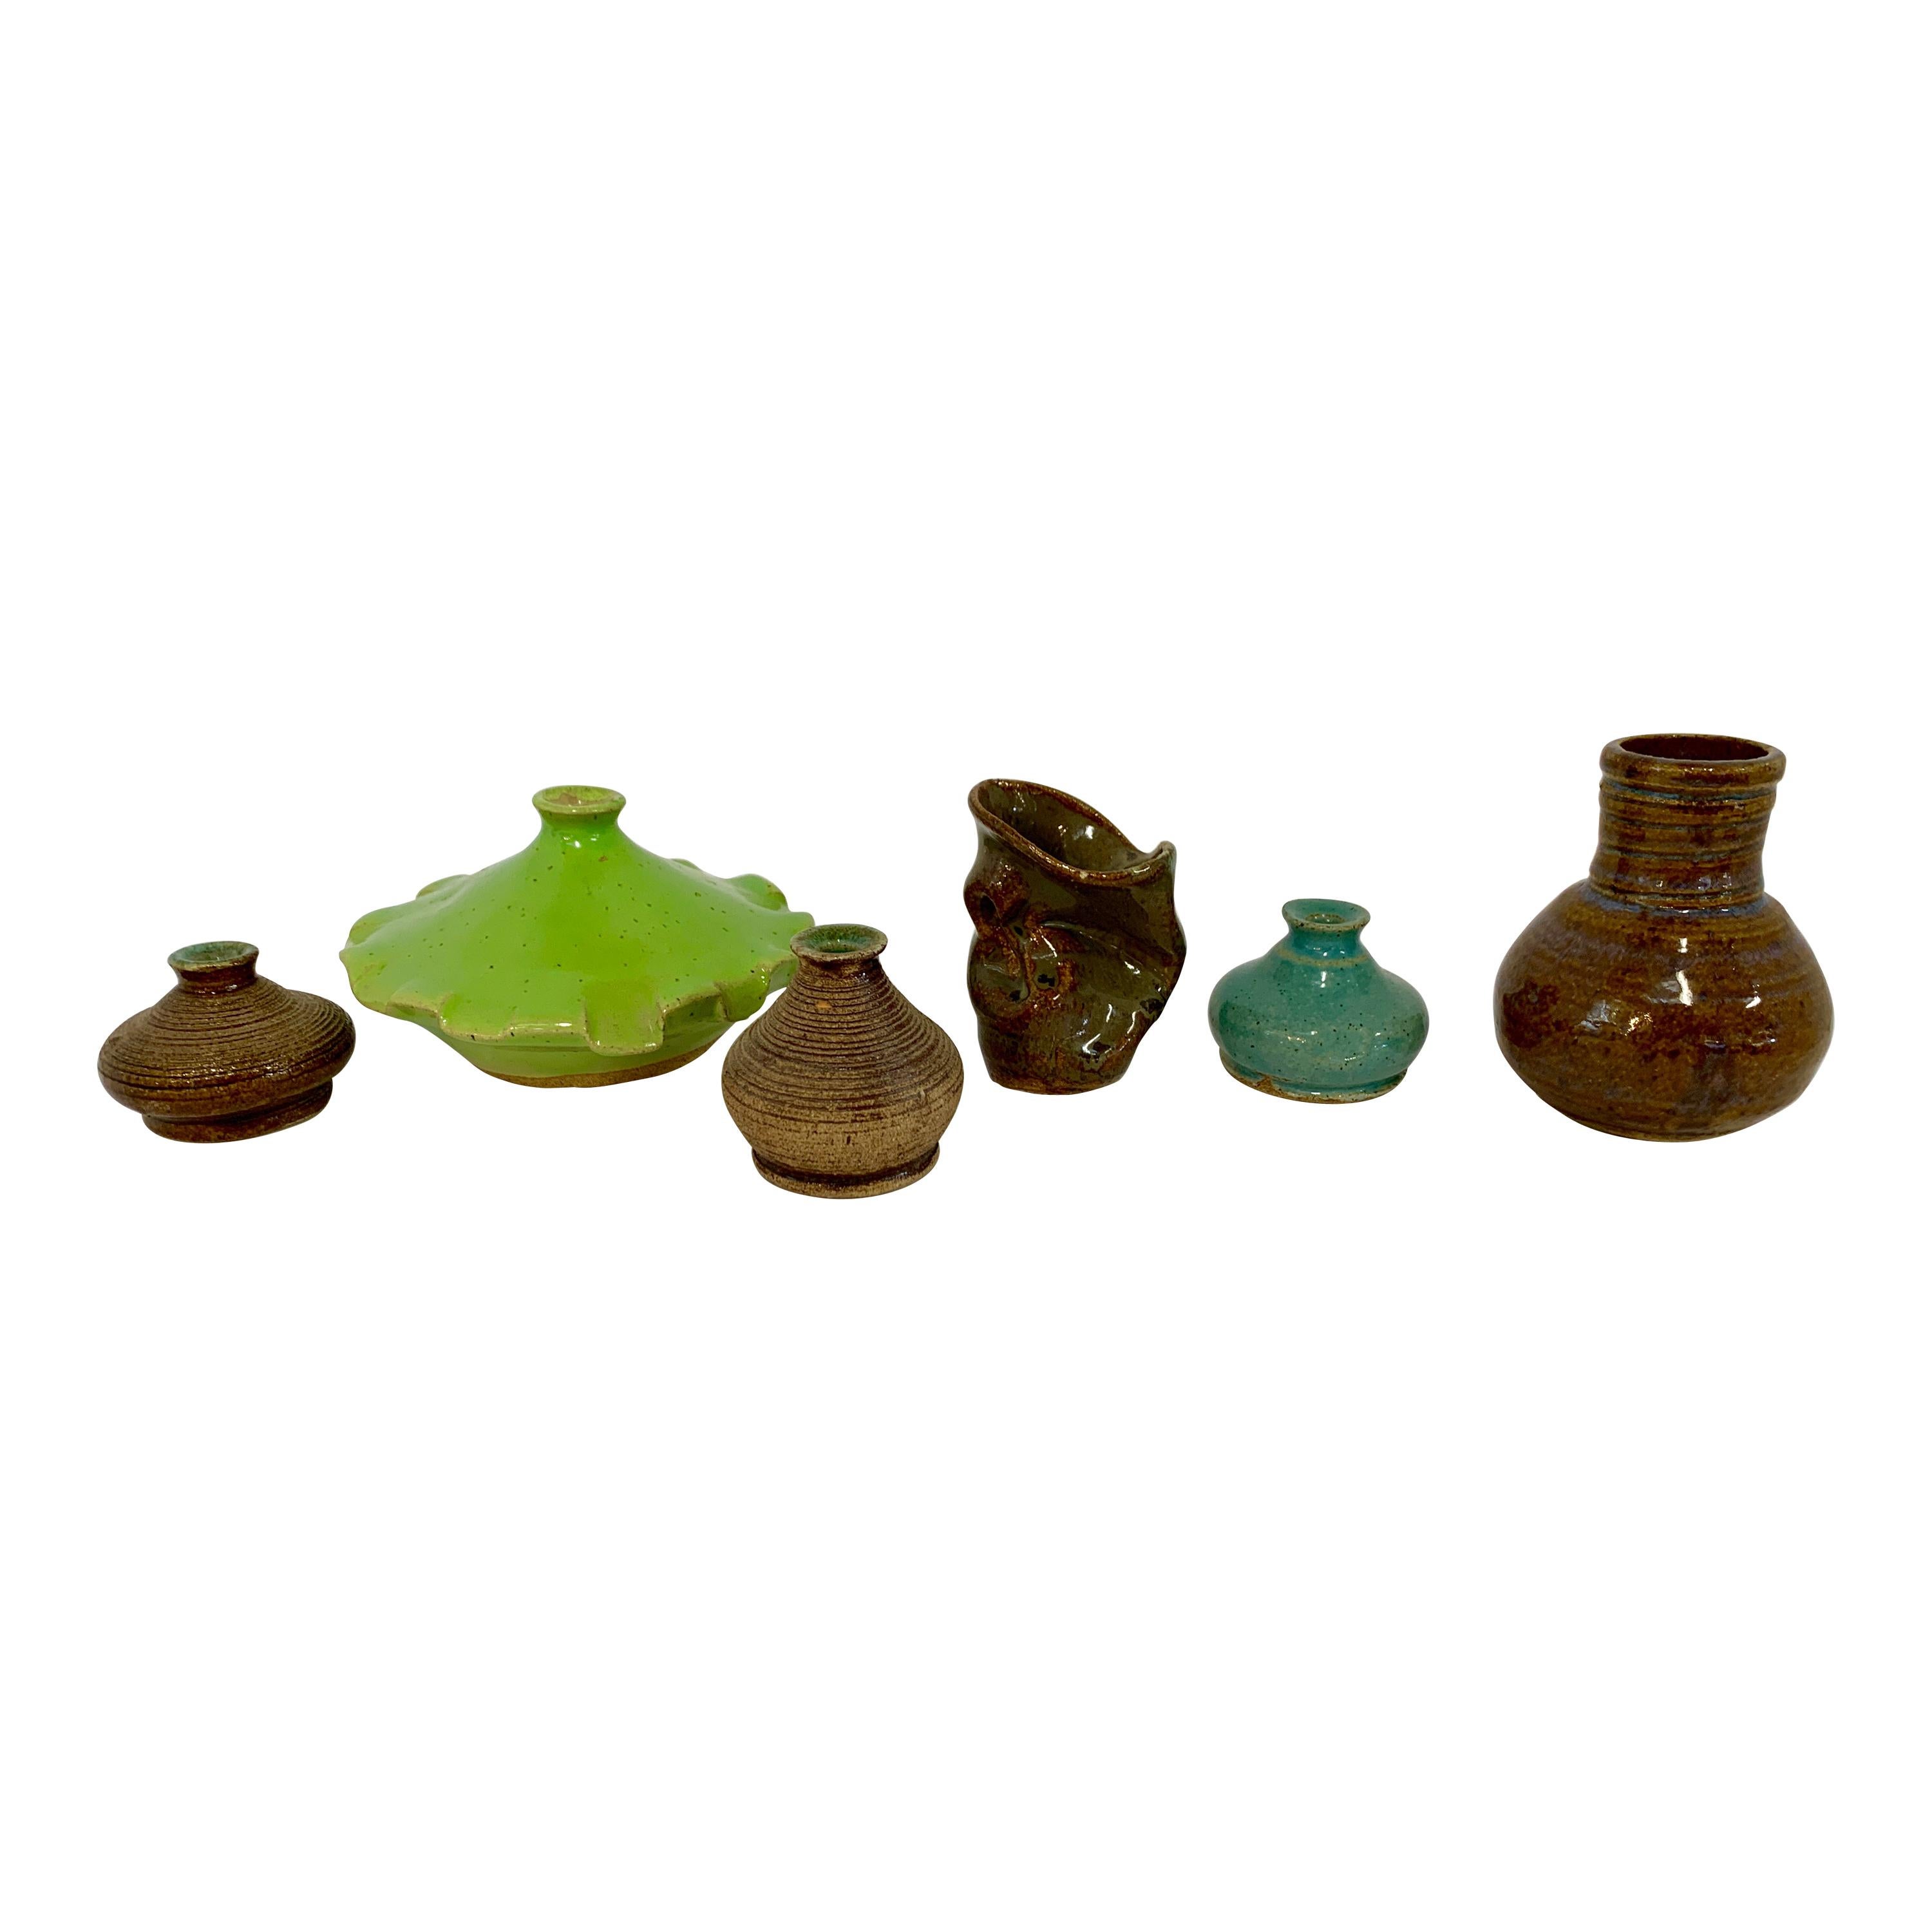 Grouping of Miniature Art Pottery Vessels